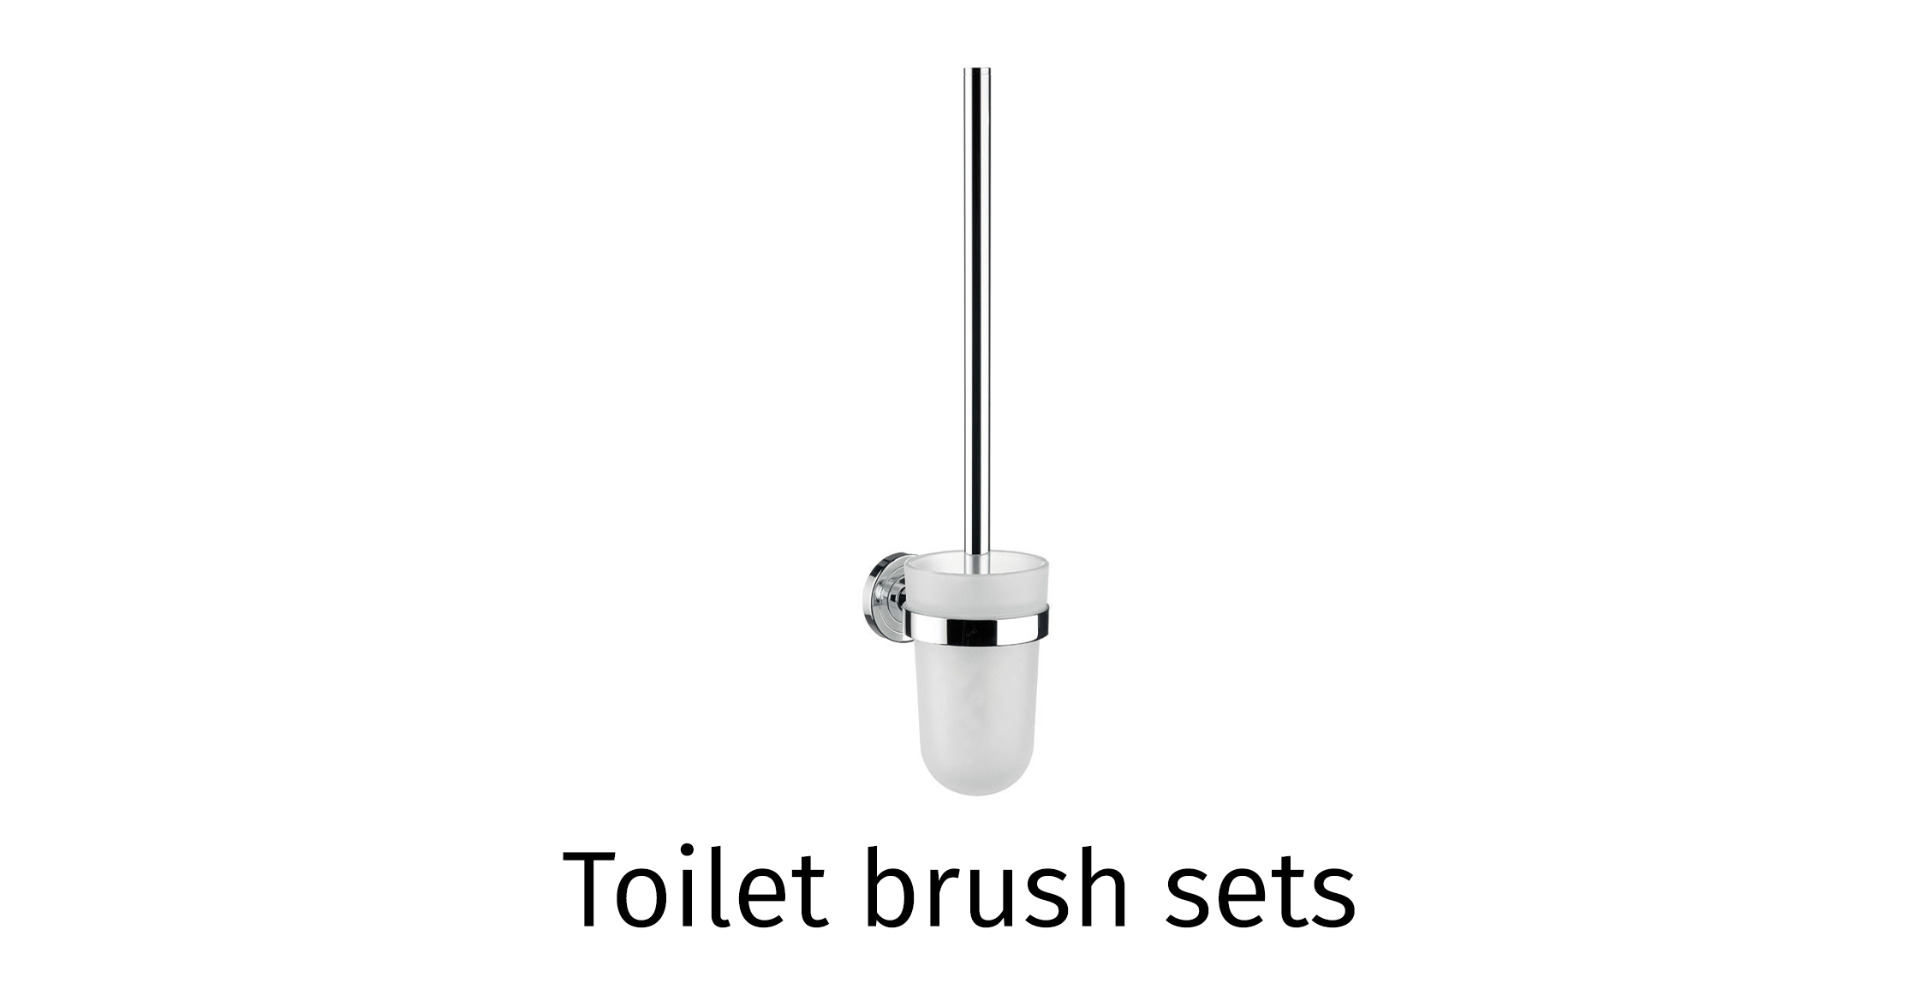 Toilet brush sets